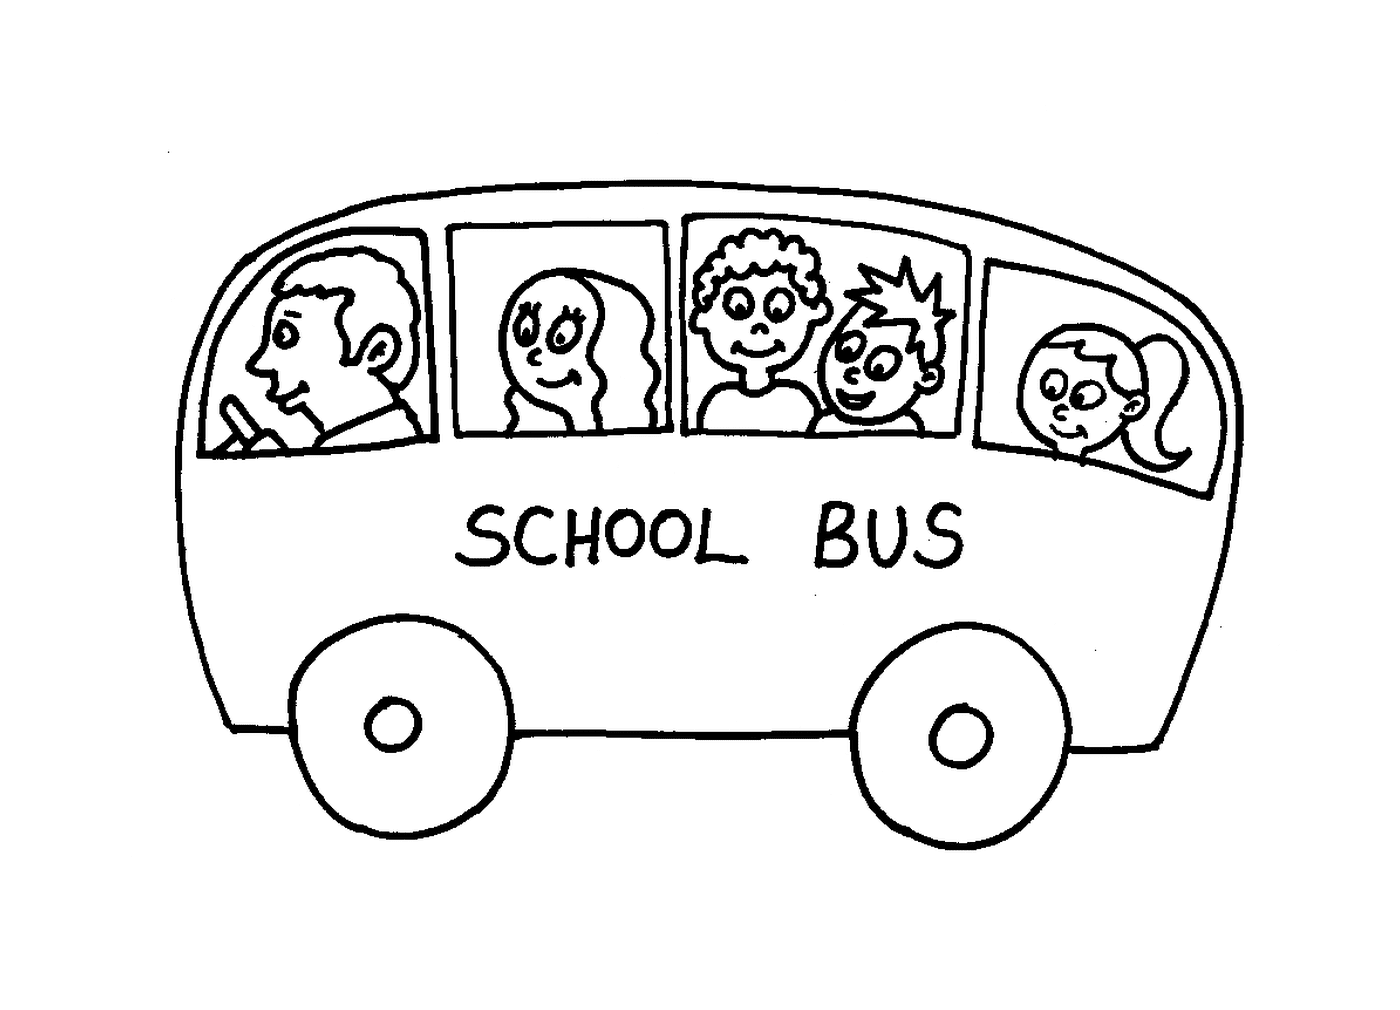  A school bus full of kids 